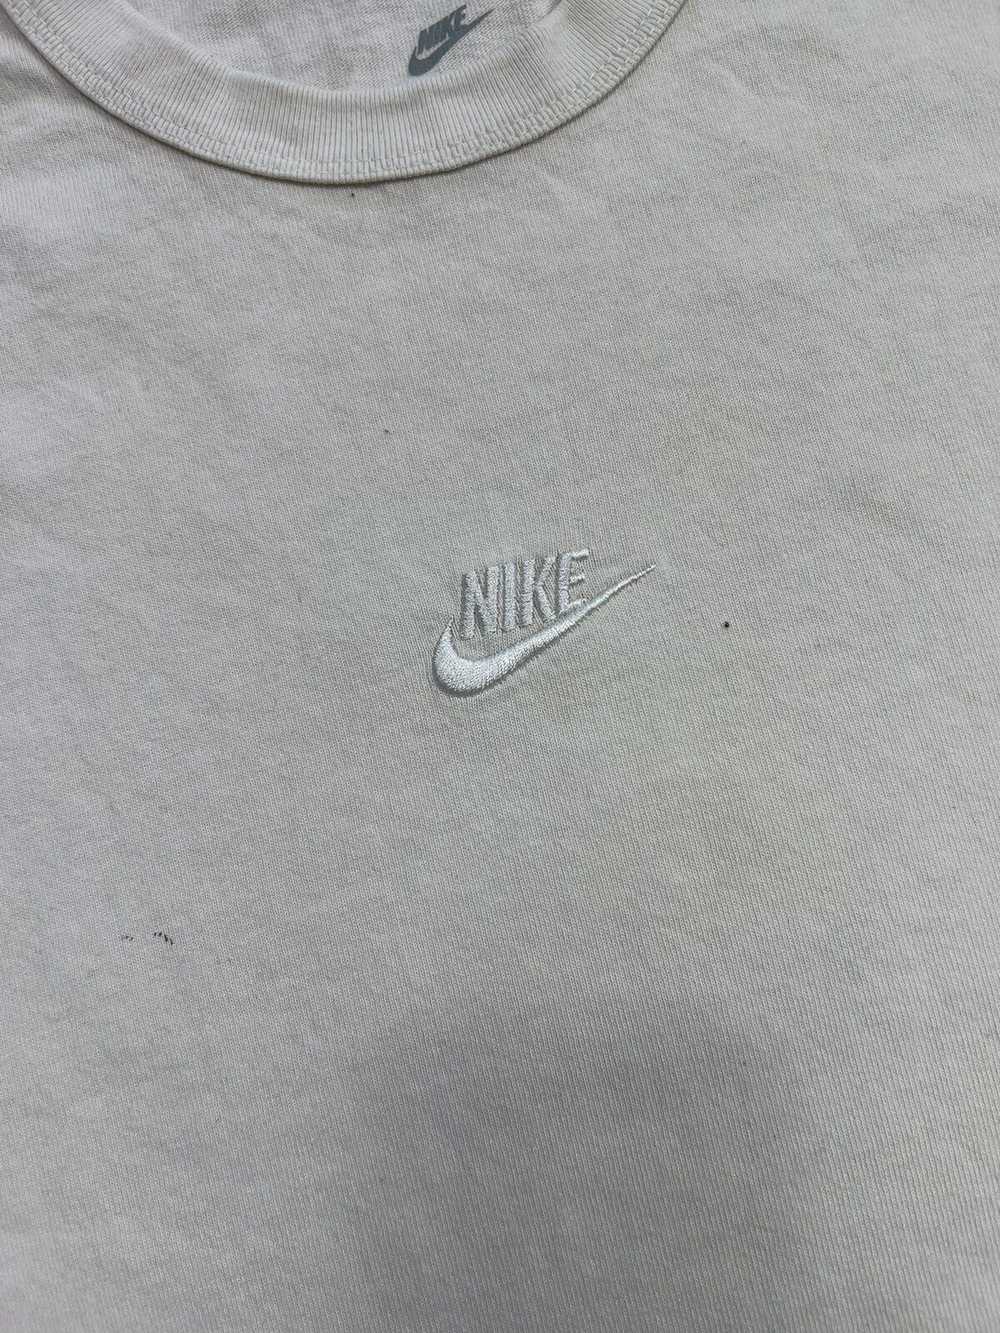 Nike Sweatshirt Nike small center logo white - image 5